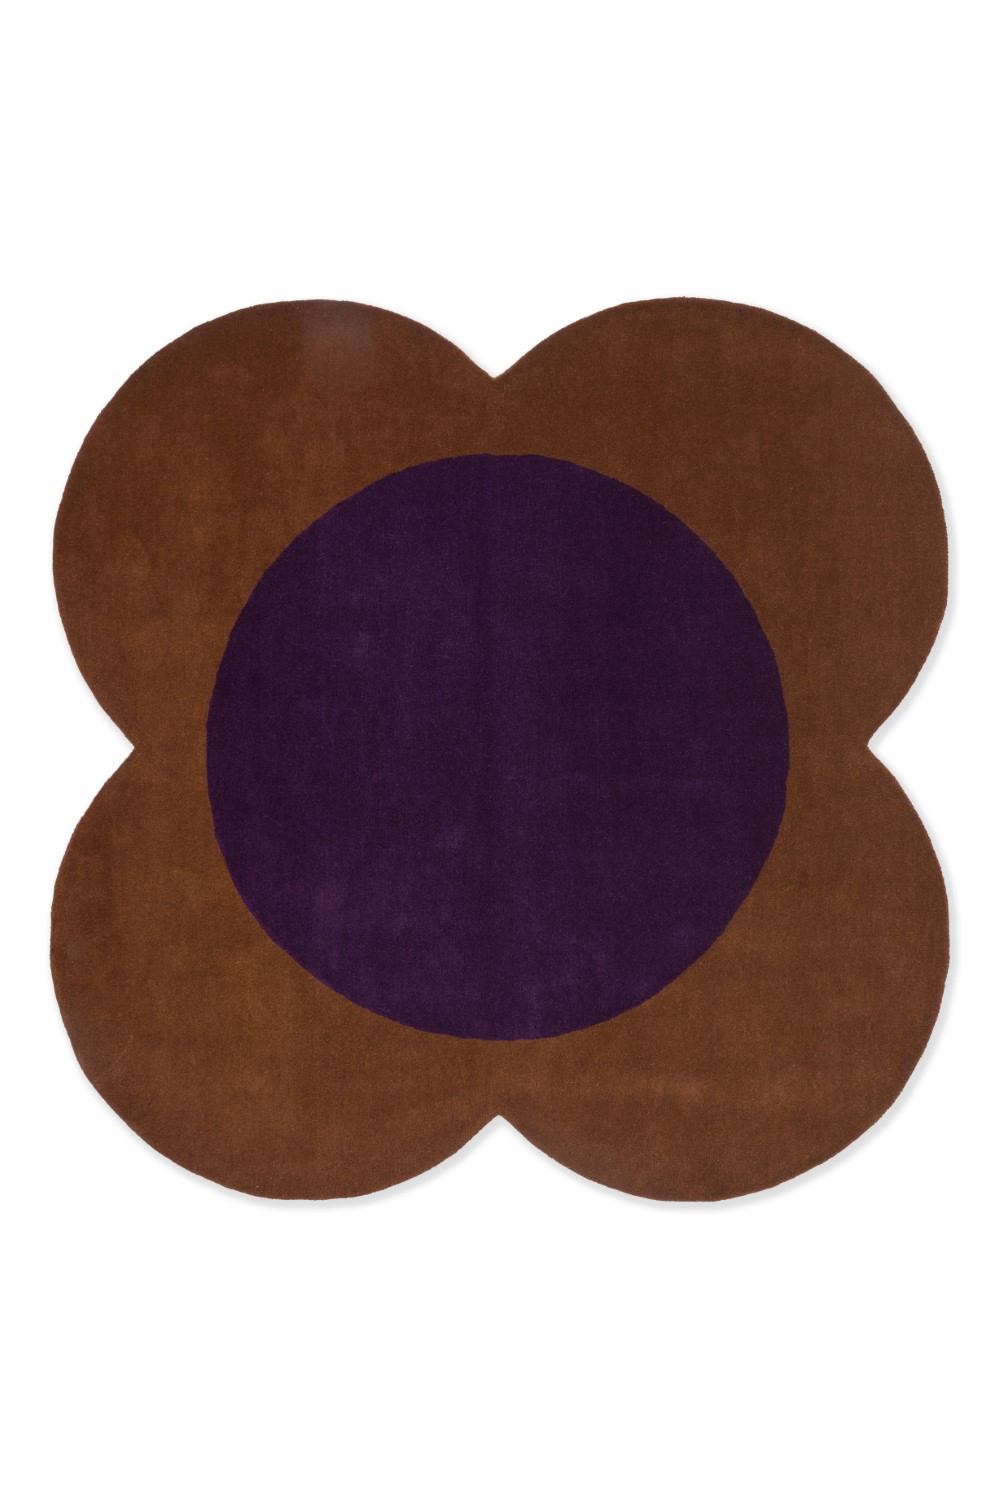 orla-kiely-rug-flower-spot-chestnut-violet-158401